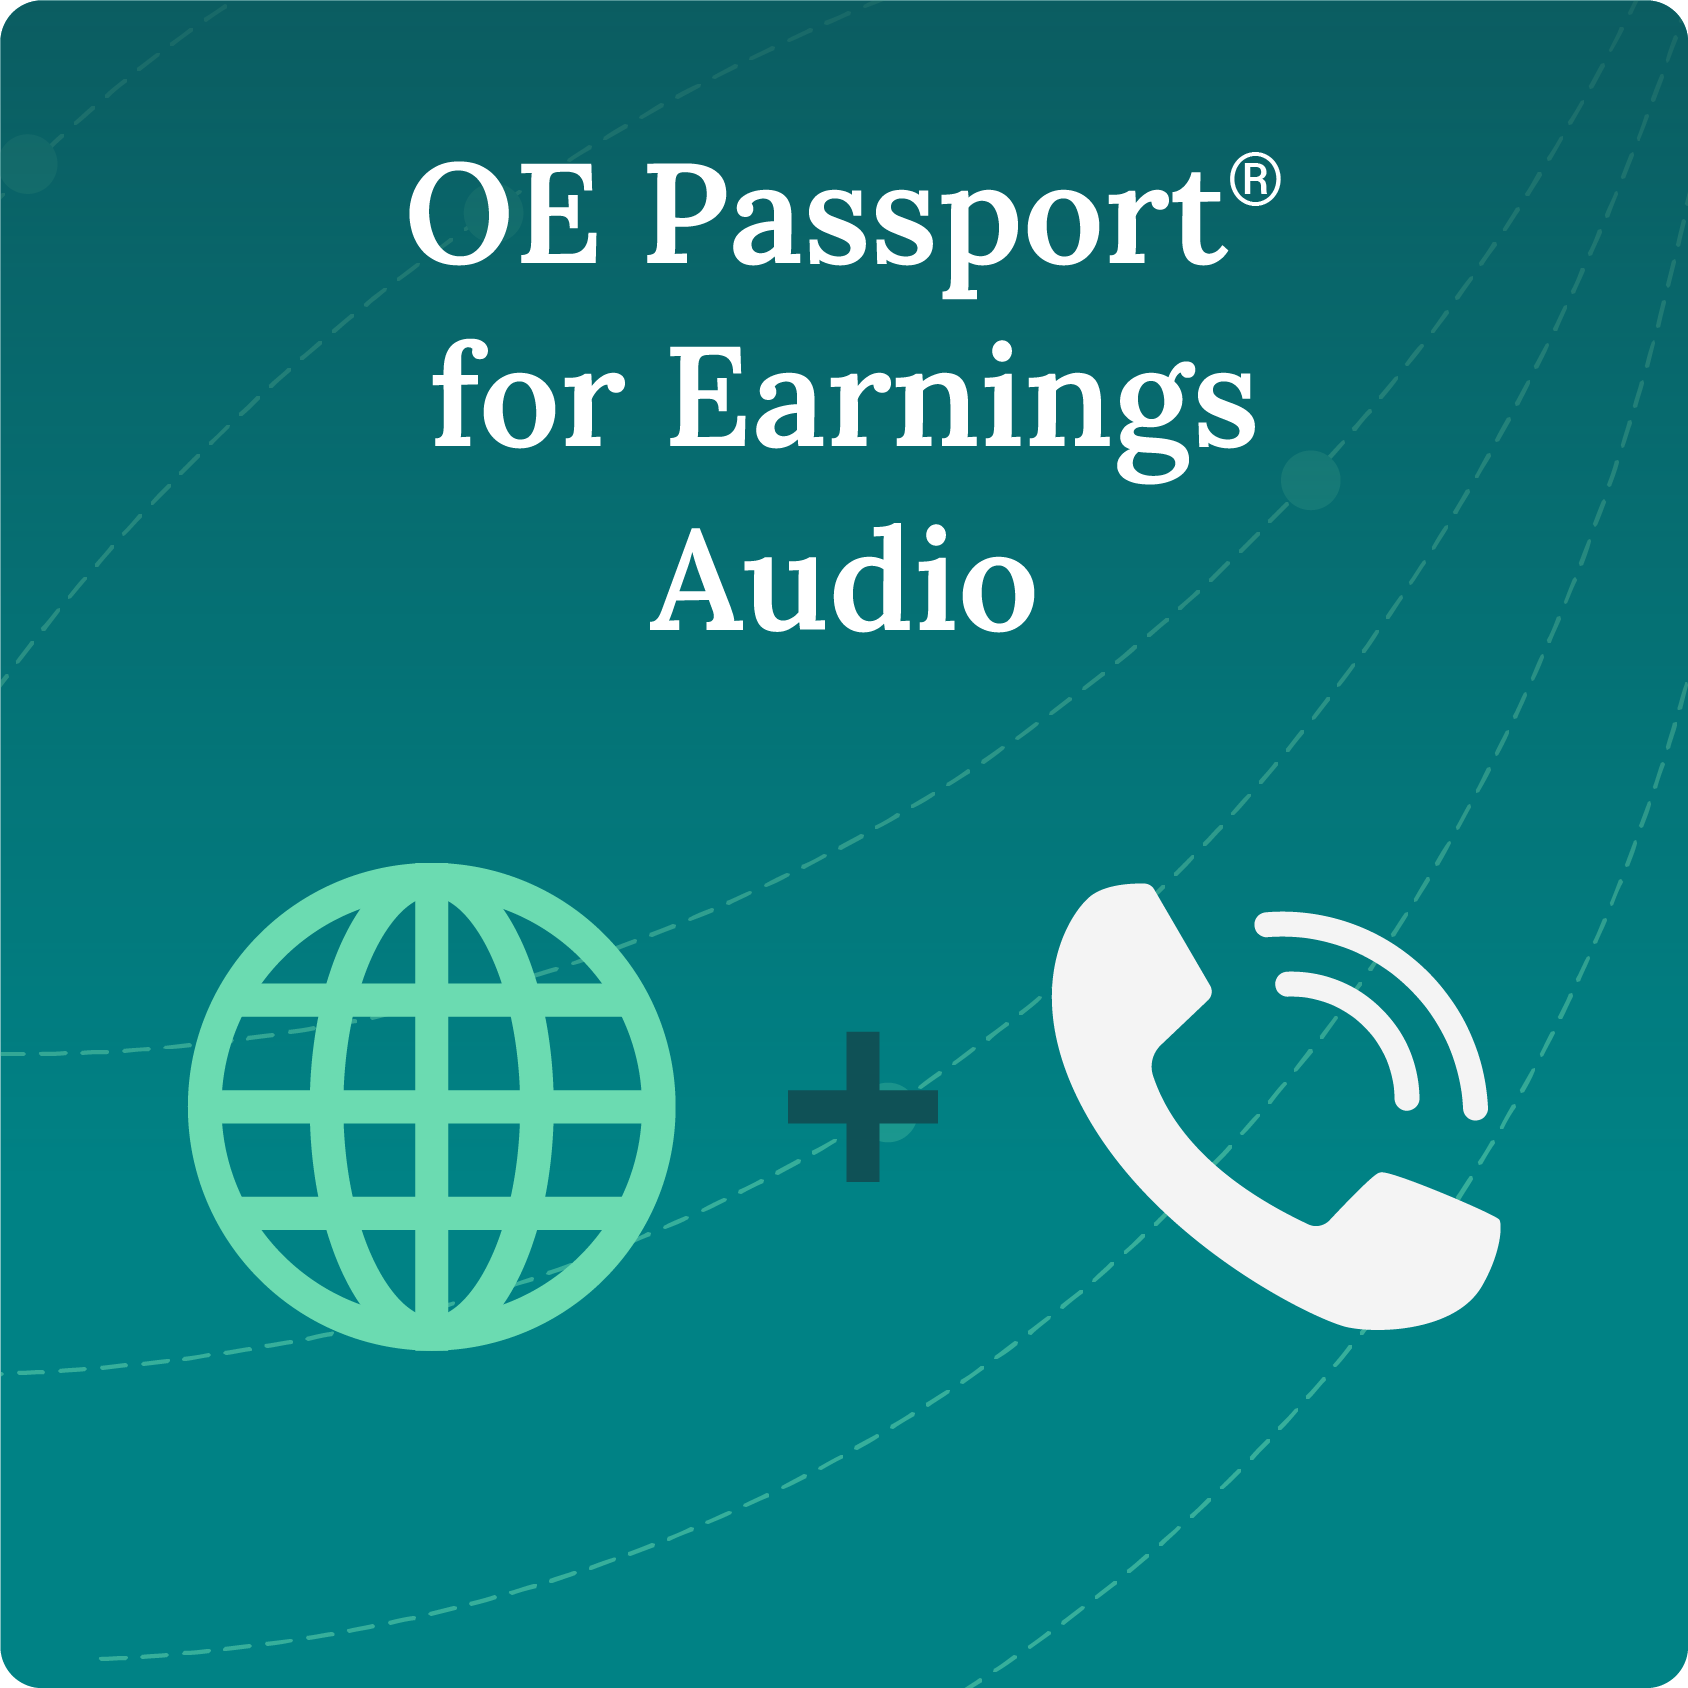 OE Passport for Earnings Audio